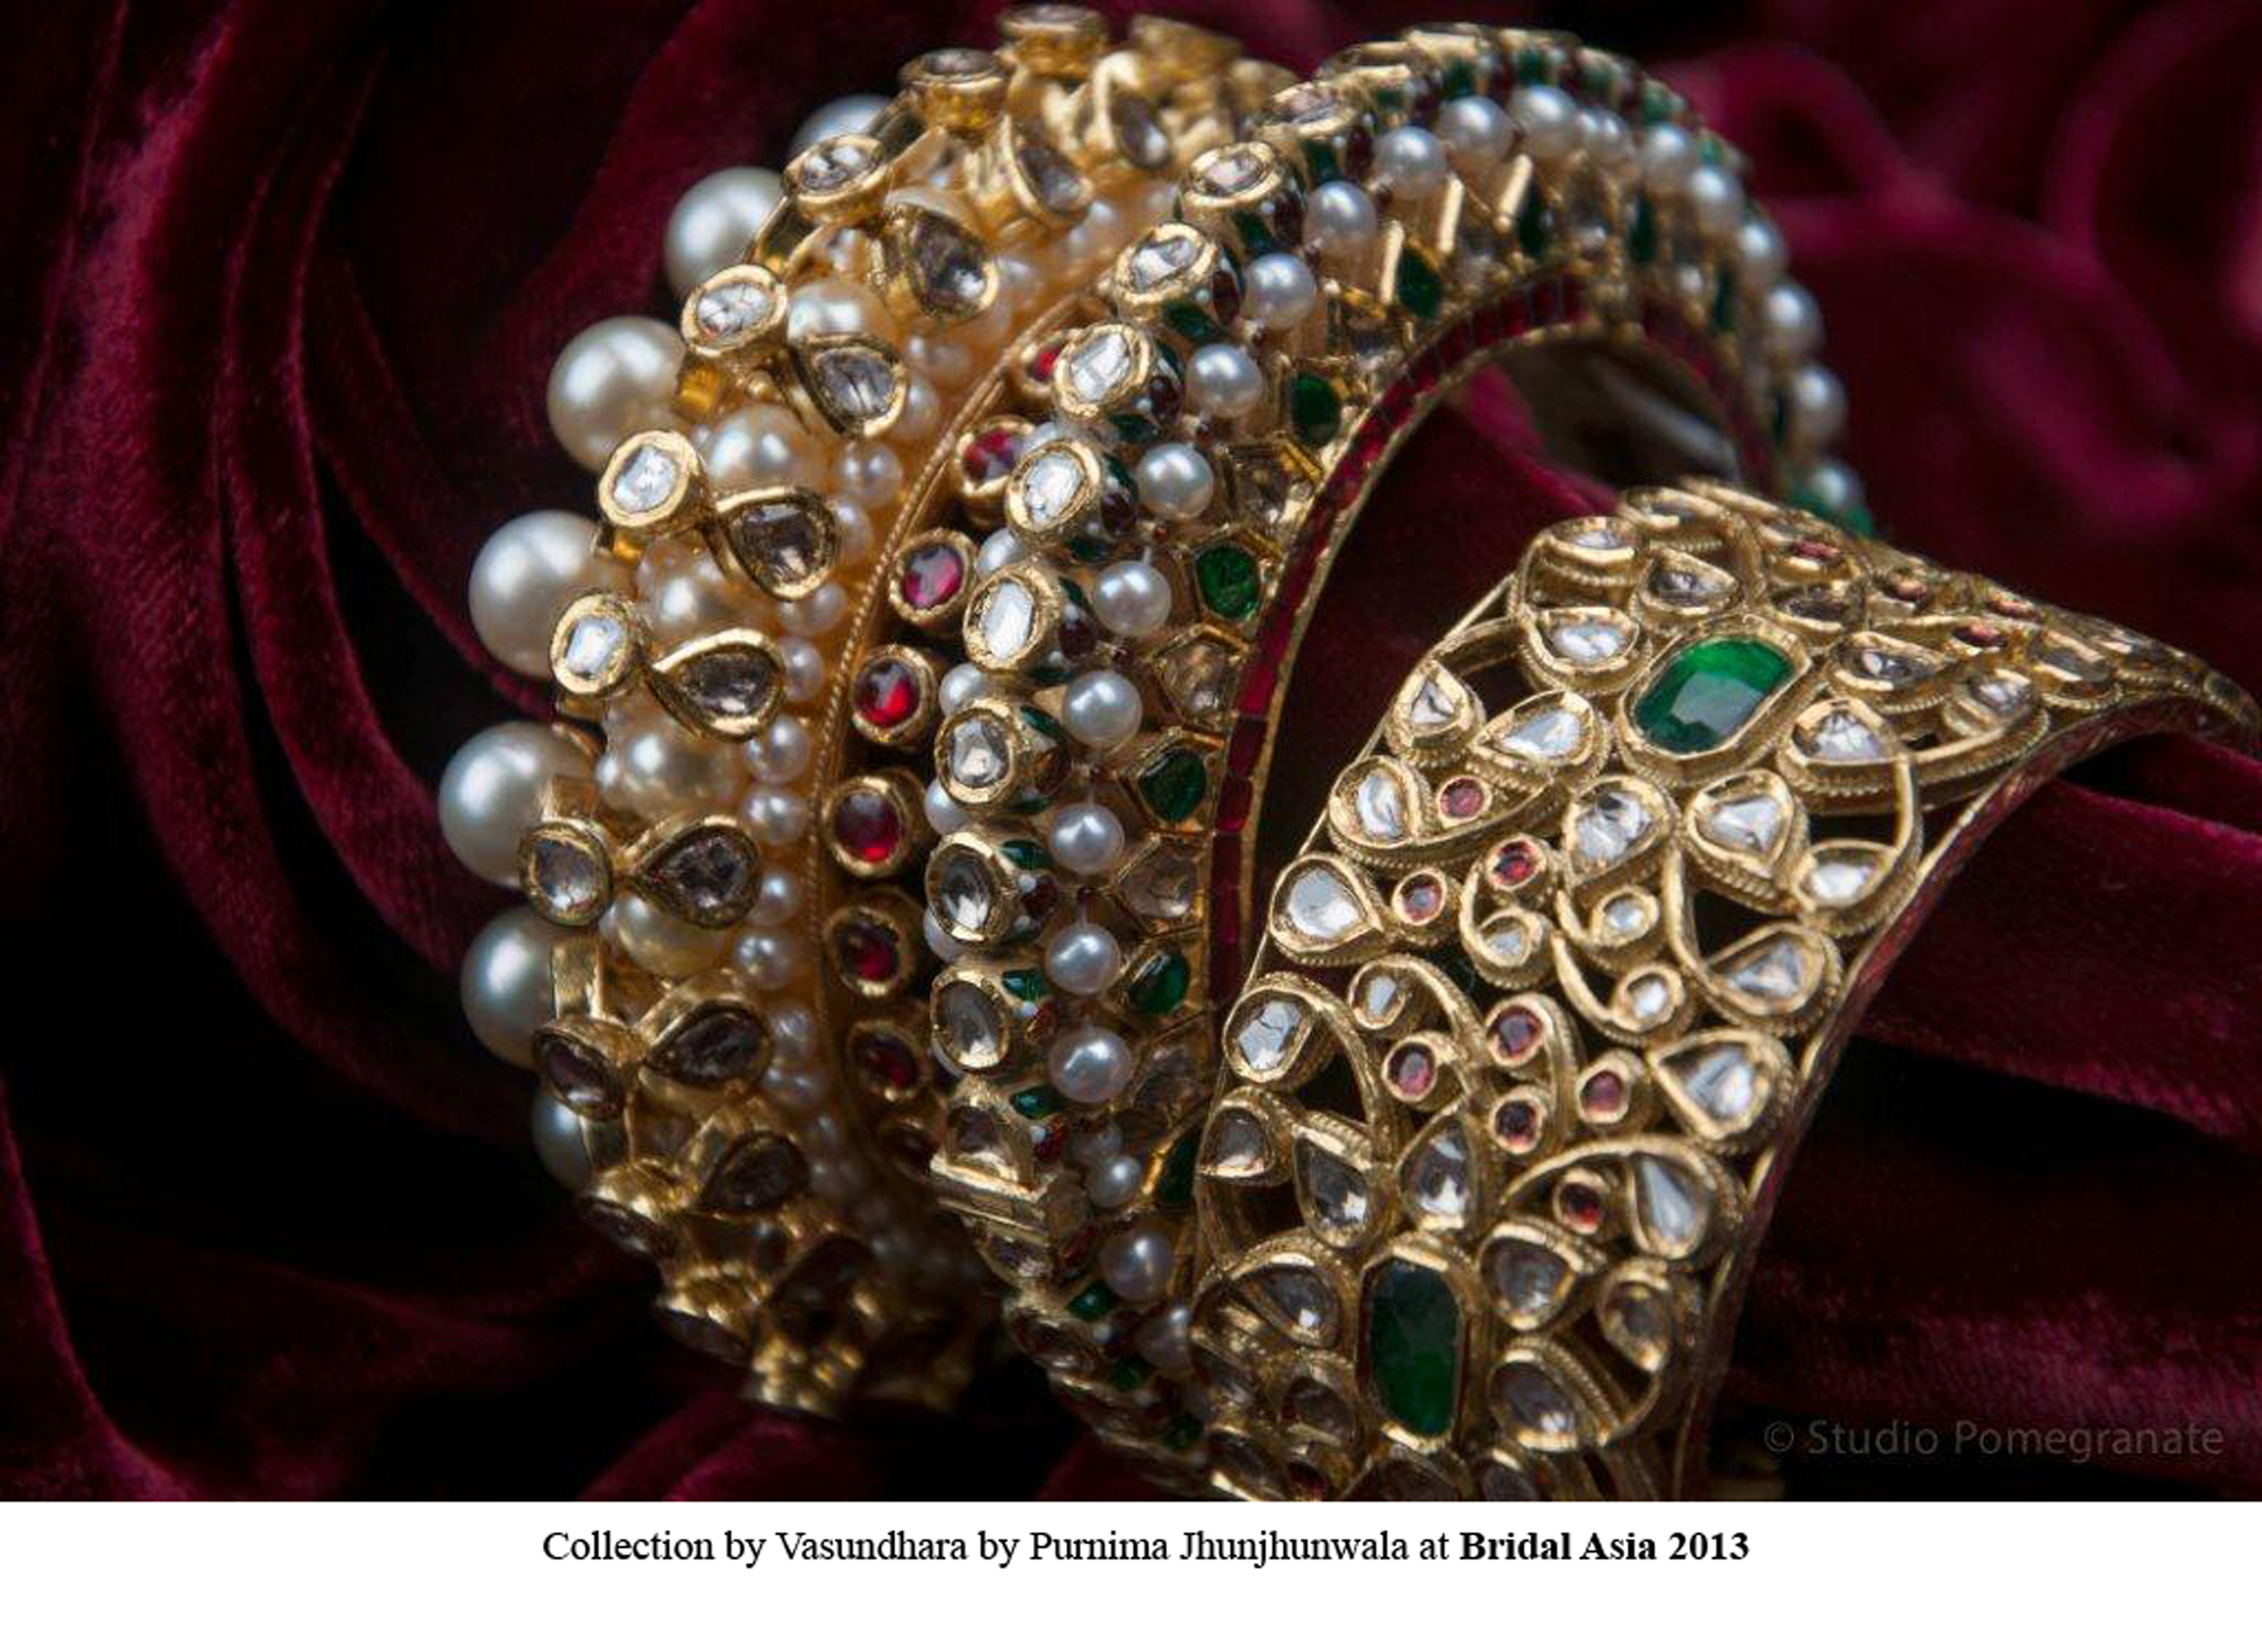 Jewelery by Vasundhara by Purnima Jhunjhunwala